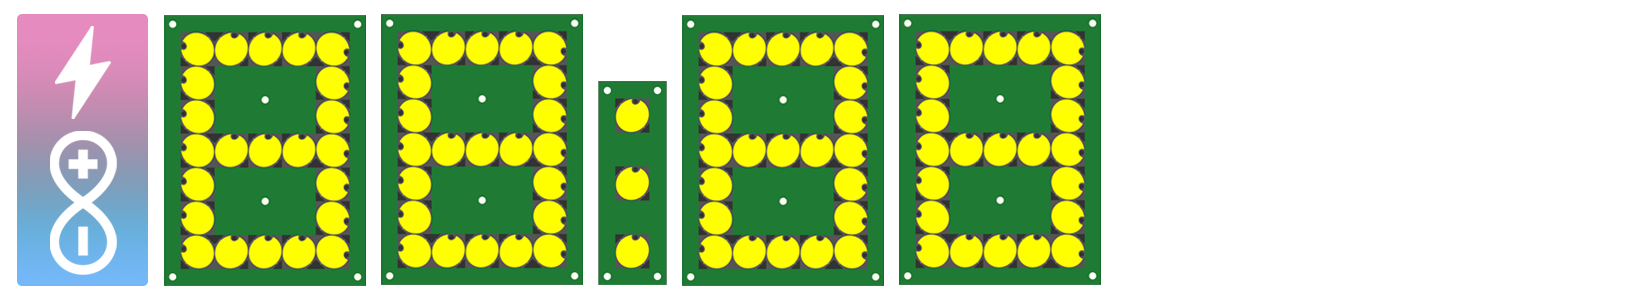 arduino-controller-4x7-seg-3dots-flip-disc-display.png